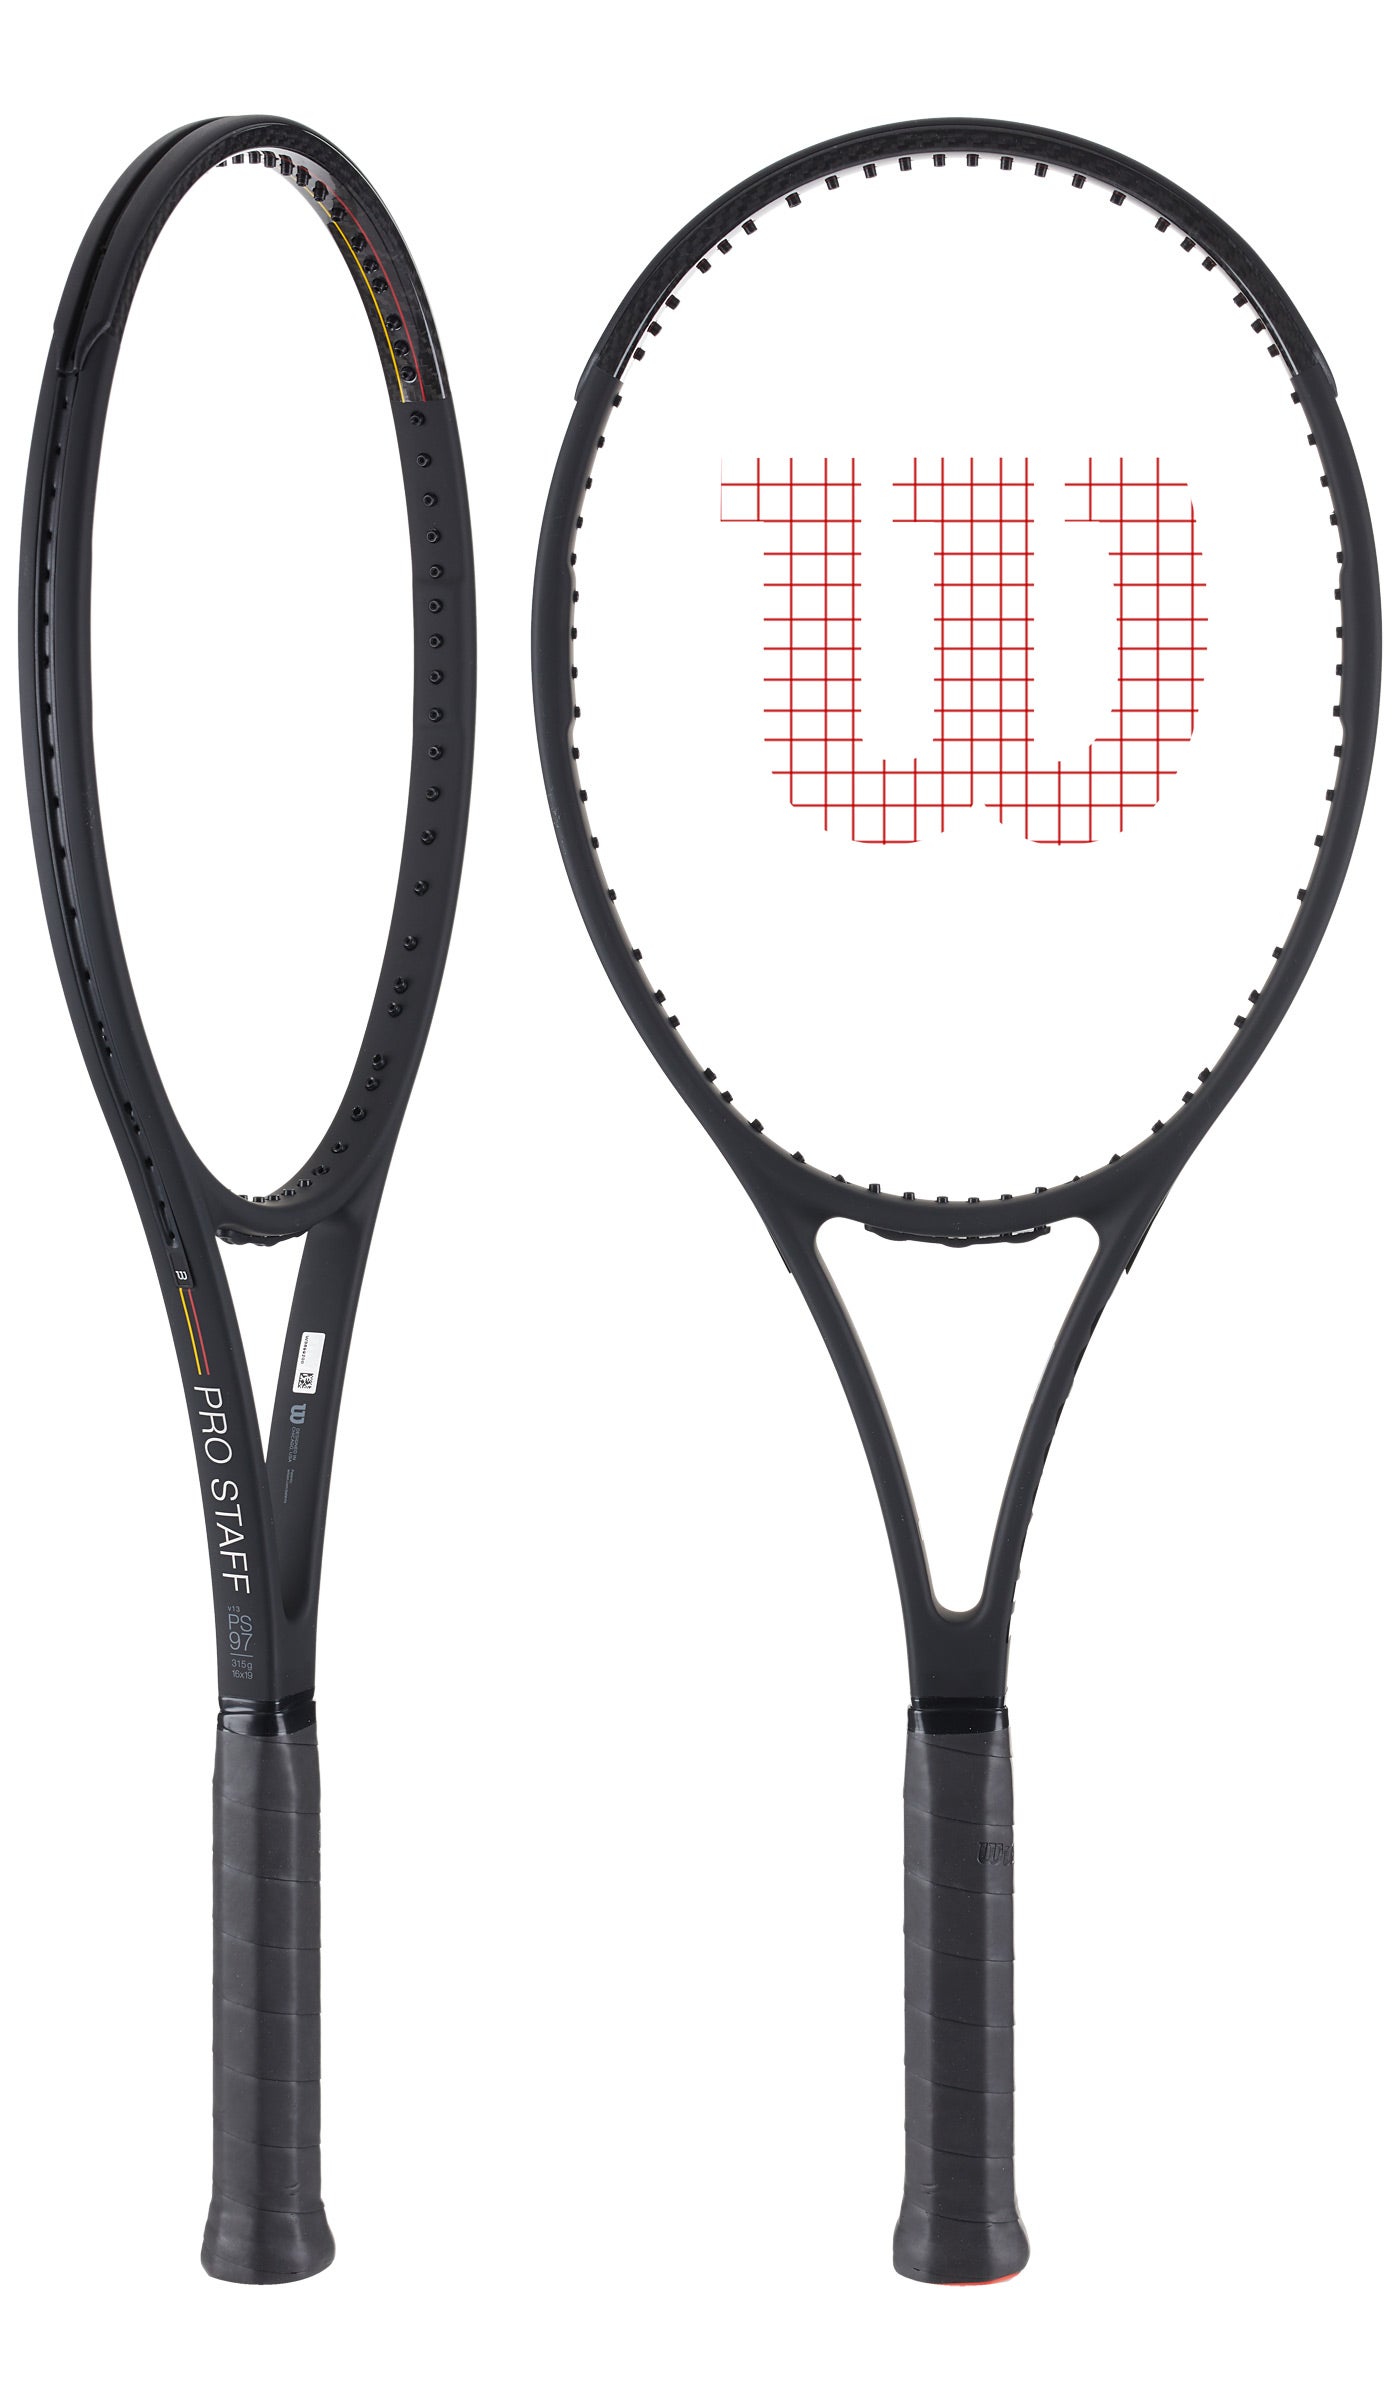 BRAND New Wilson Pro Staff 97 v13 Tennis Racquet 4 1/2 Racket 16x19 Latest model 